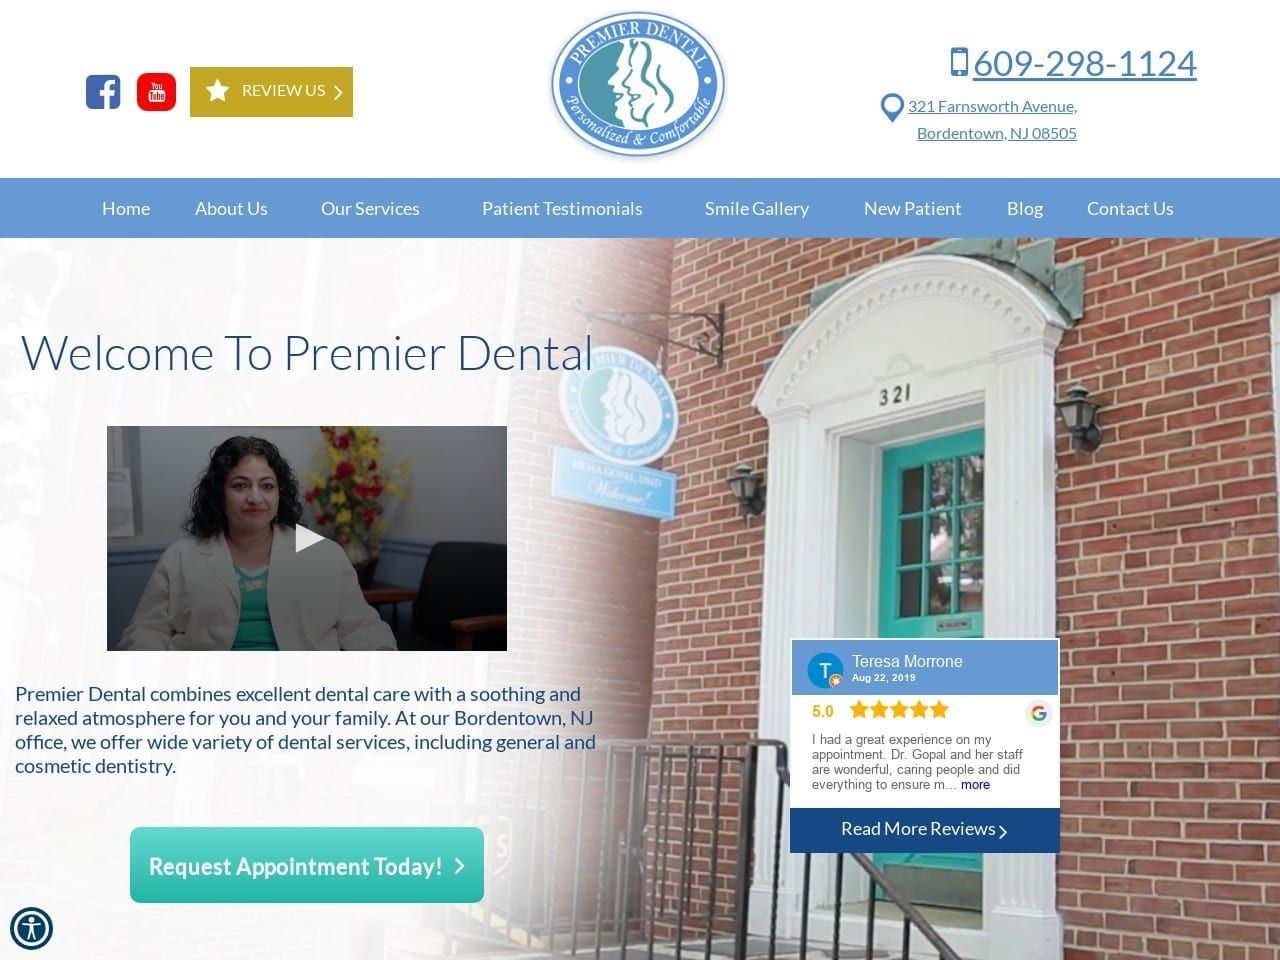 Premier Dental Website Screenshot from bordentowndentist.com